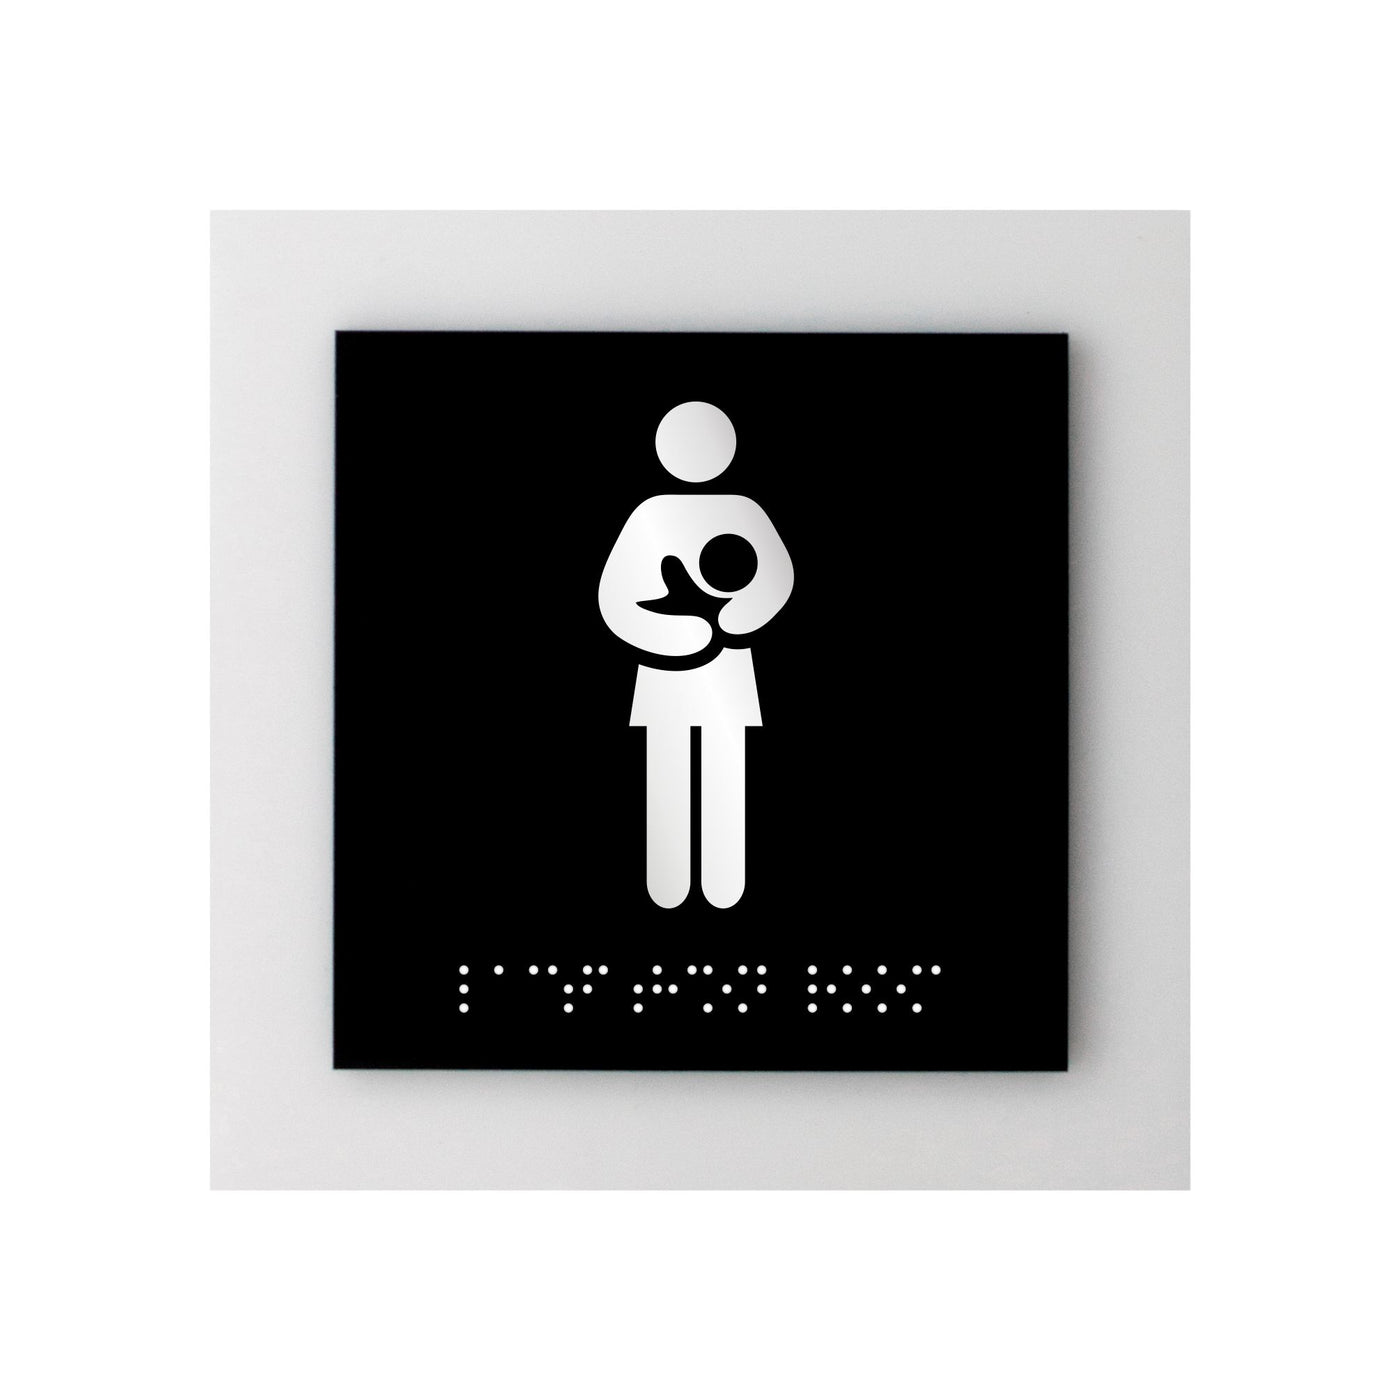 Acrylic Lactation Room Sign - "Simple" Design